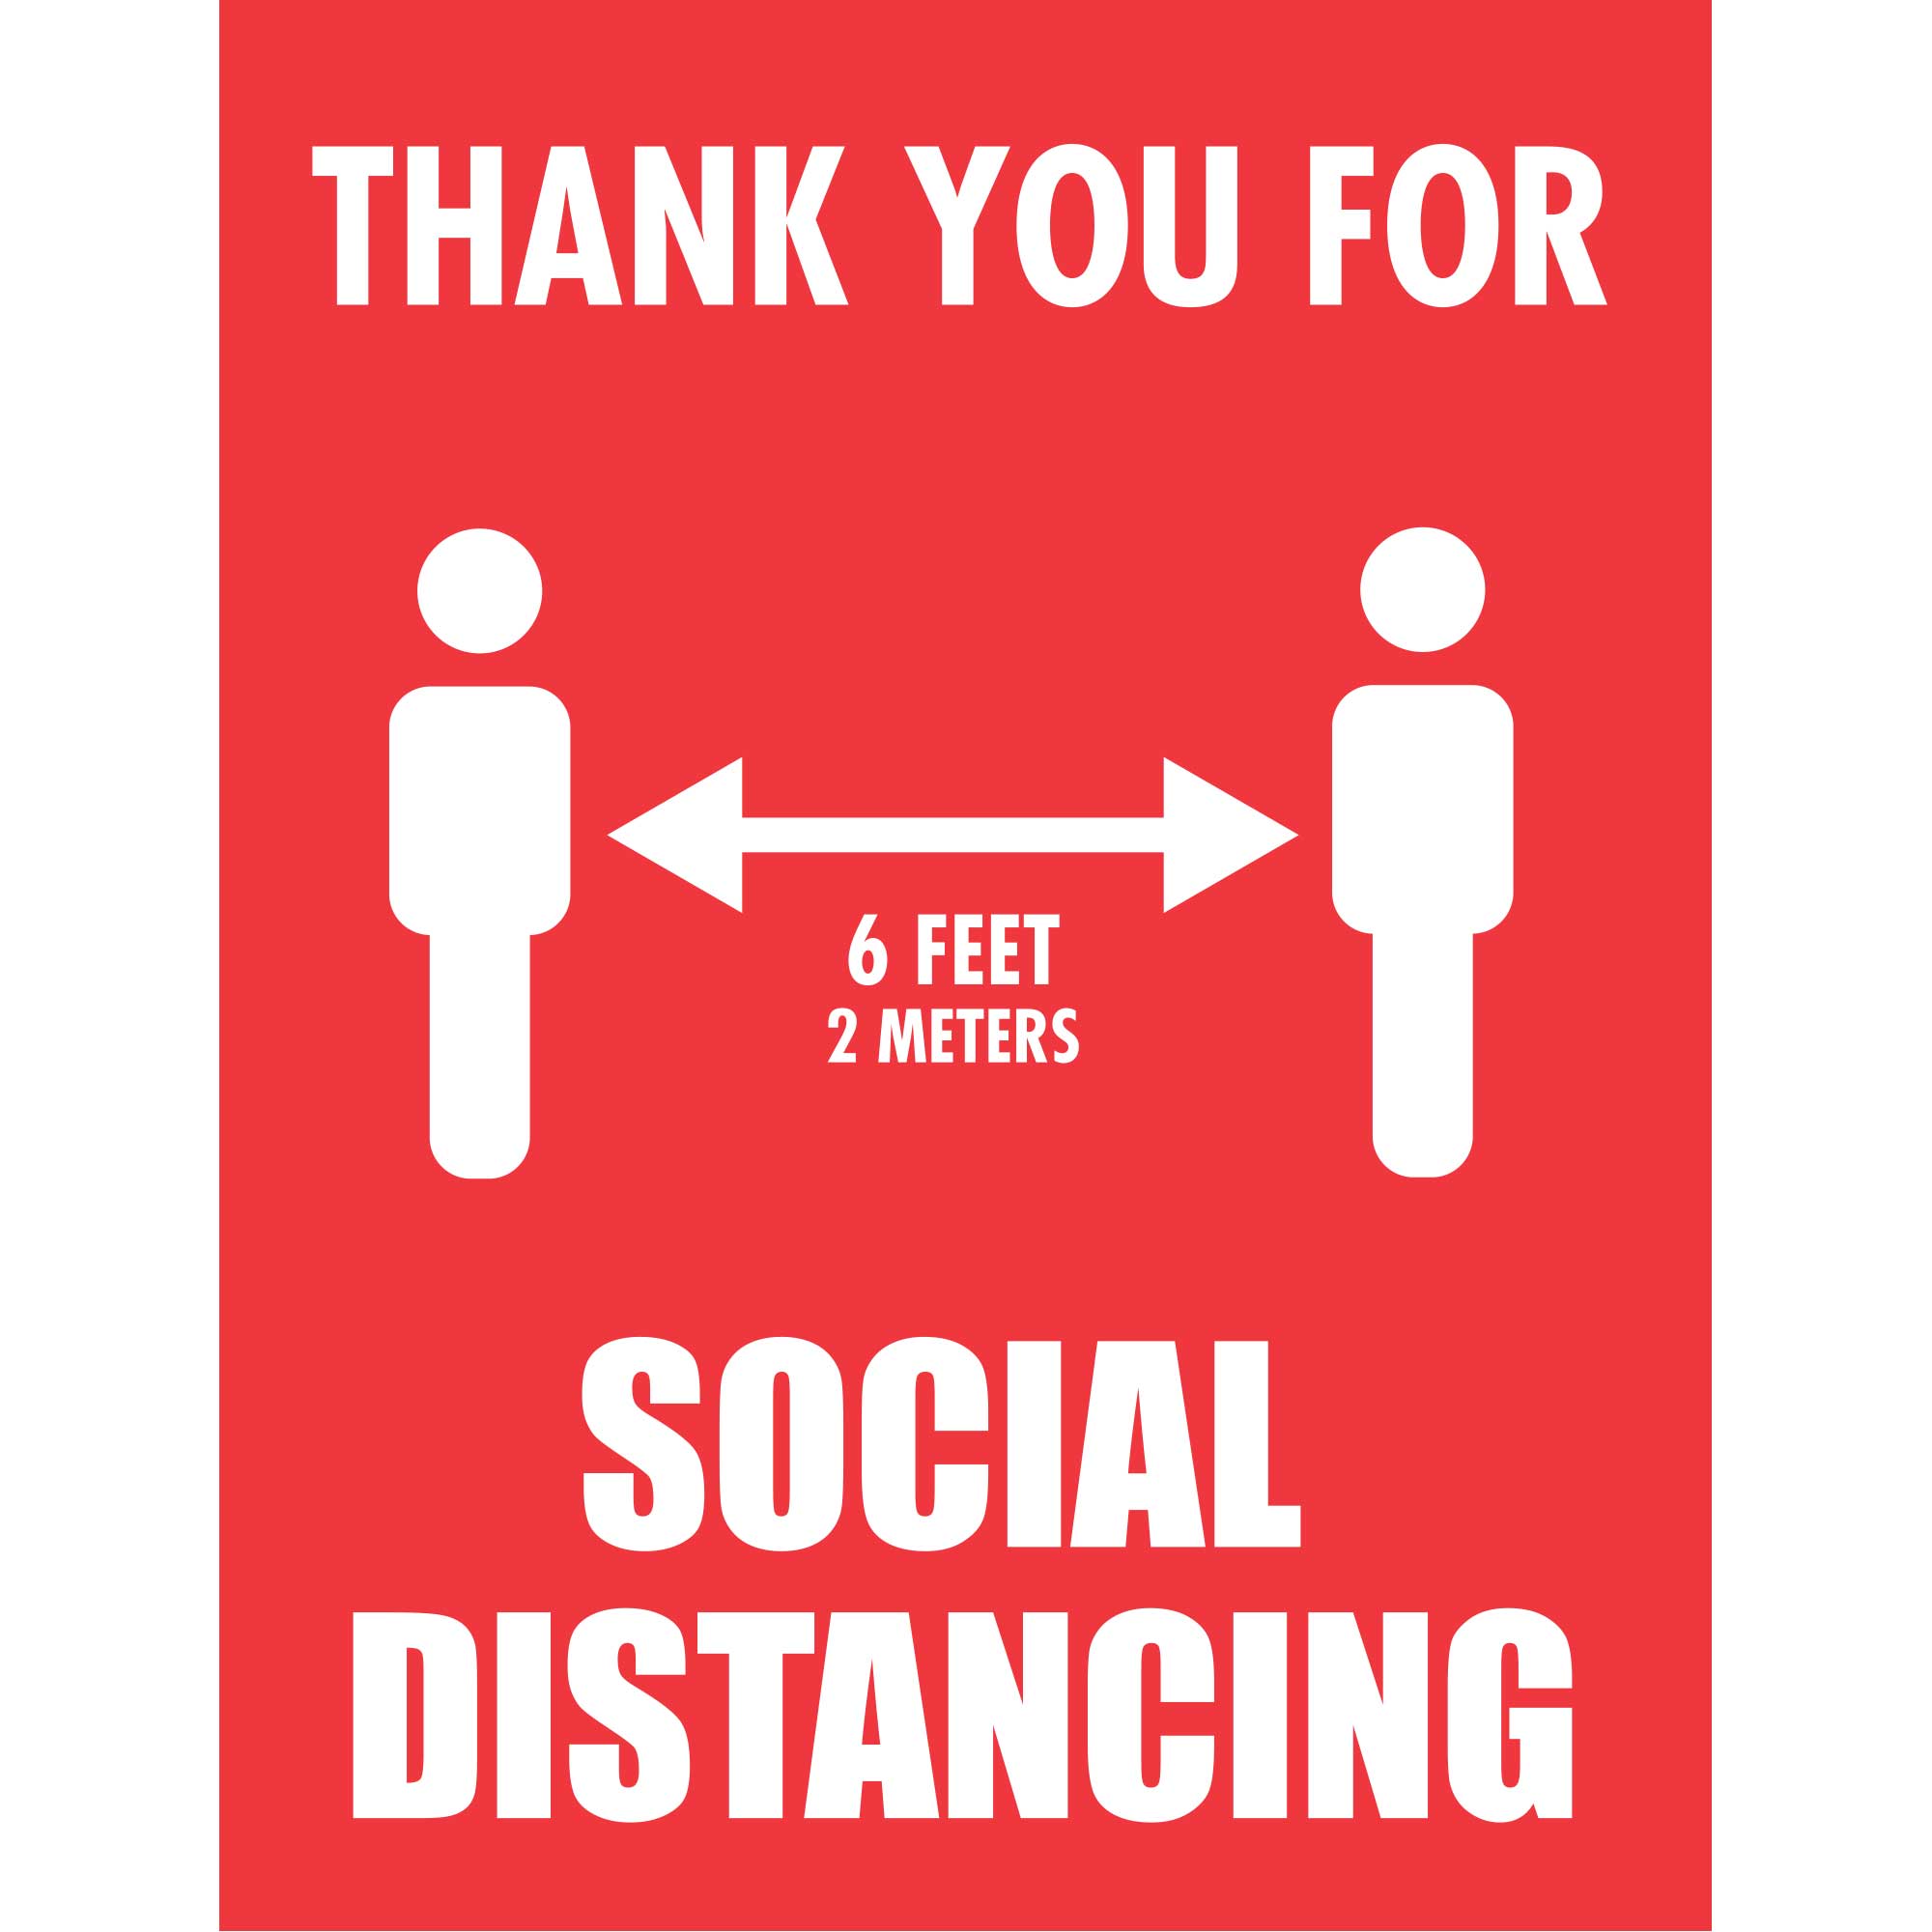 voedsel vergroting bijeenkomst Thank You For 6 Feet / 2 Meters Social Distancing" Poster | Plum Grove